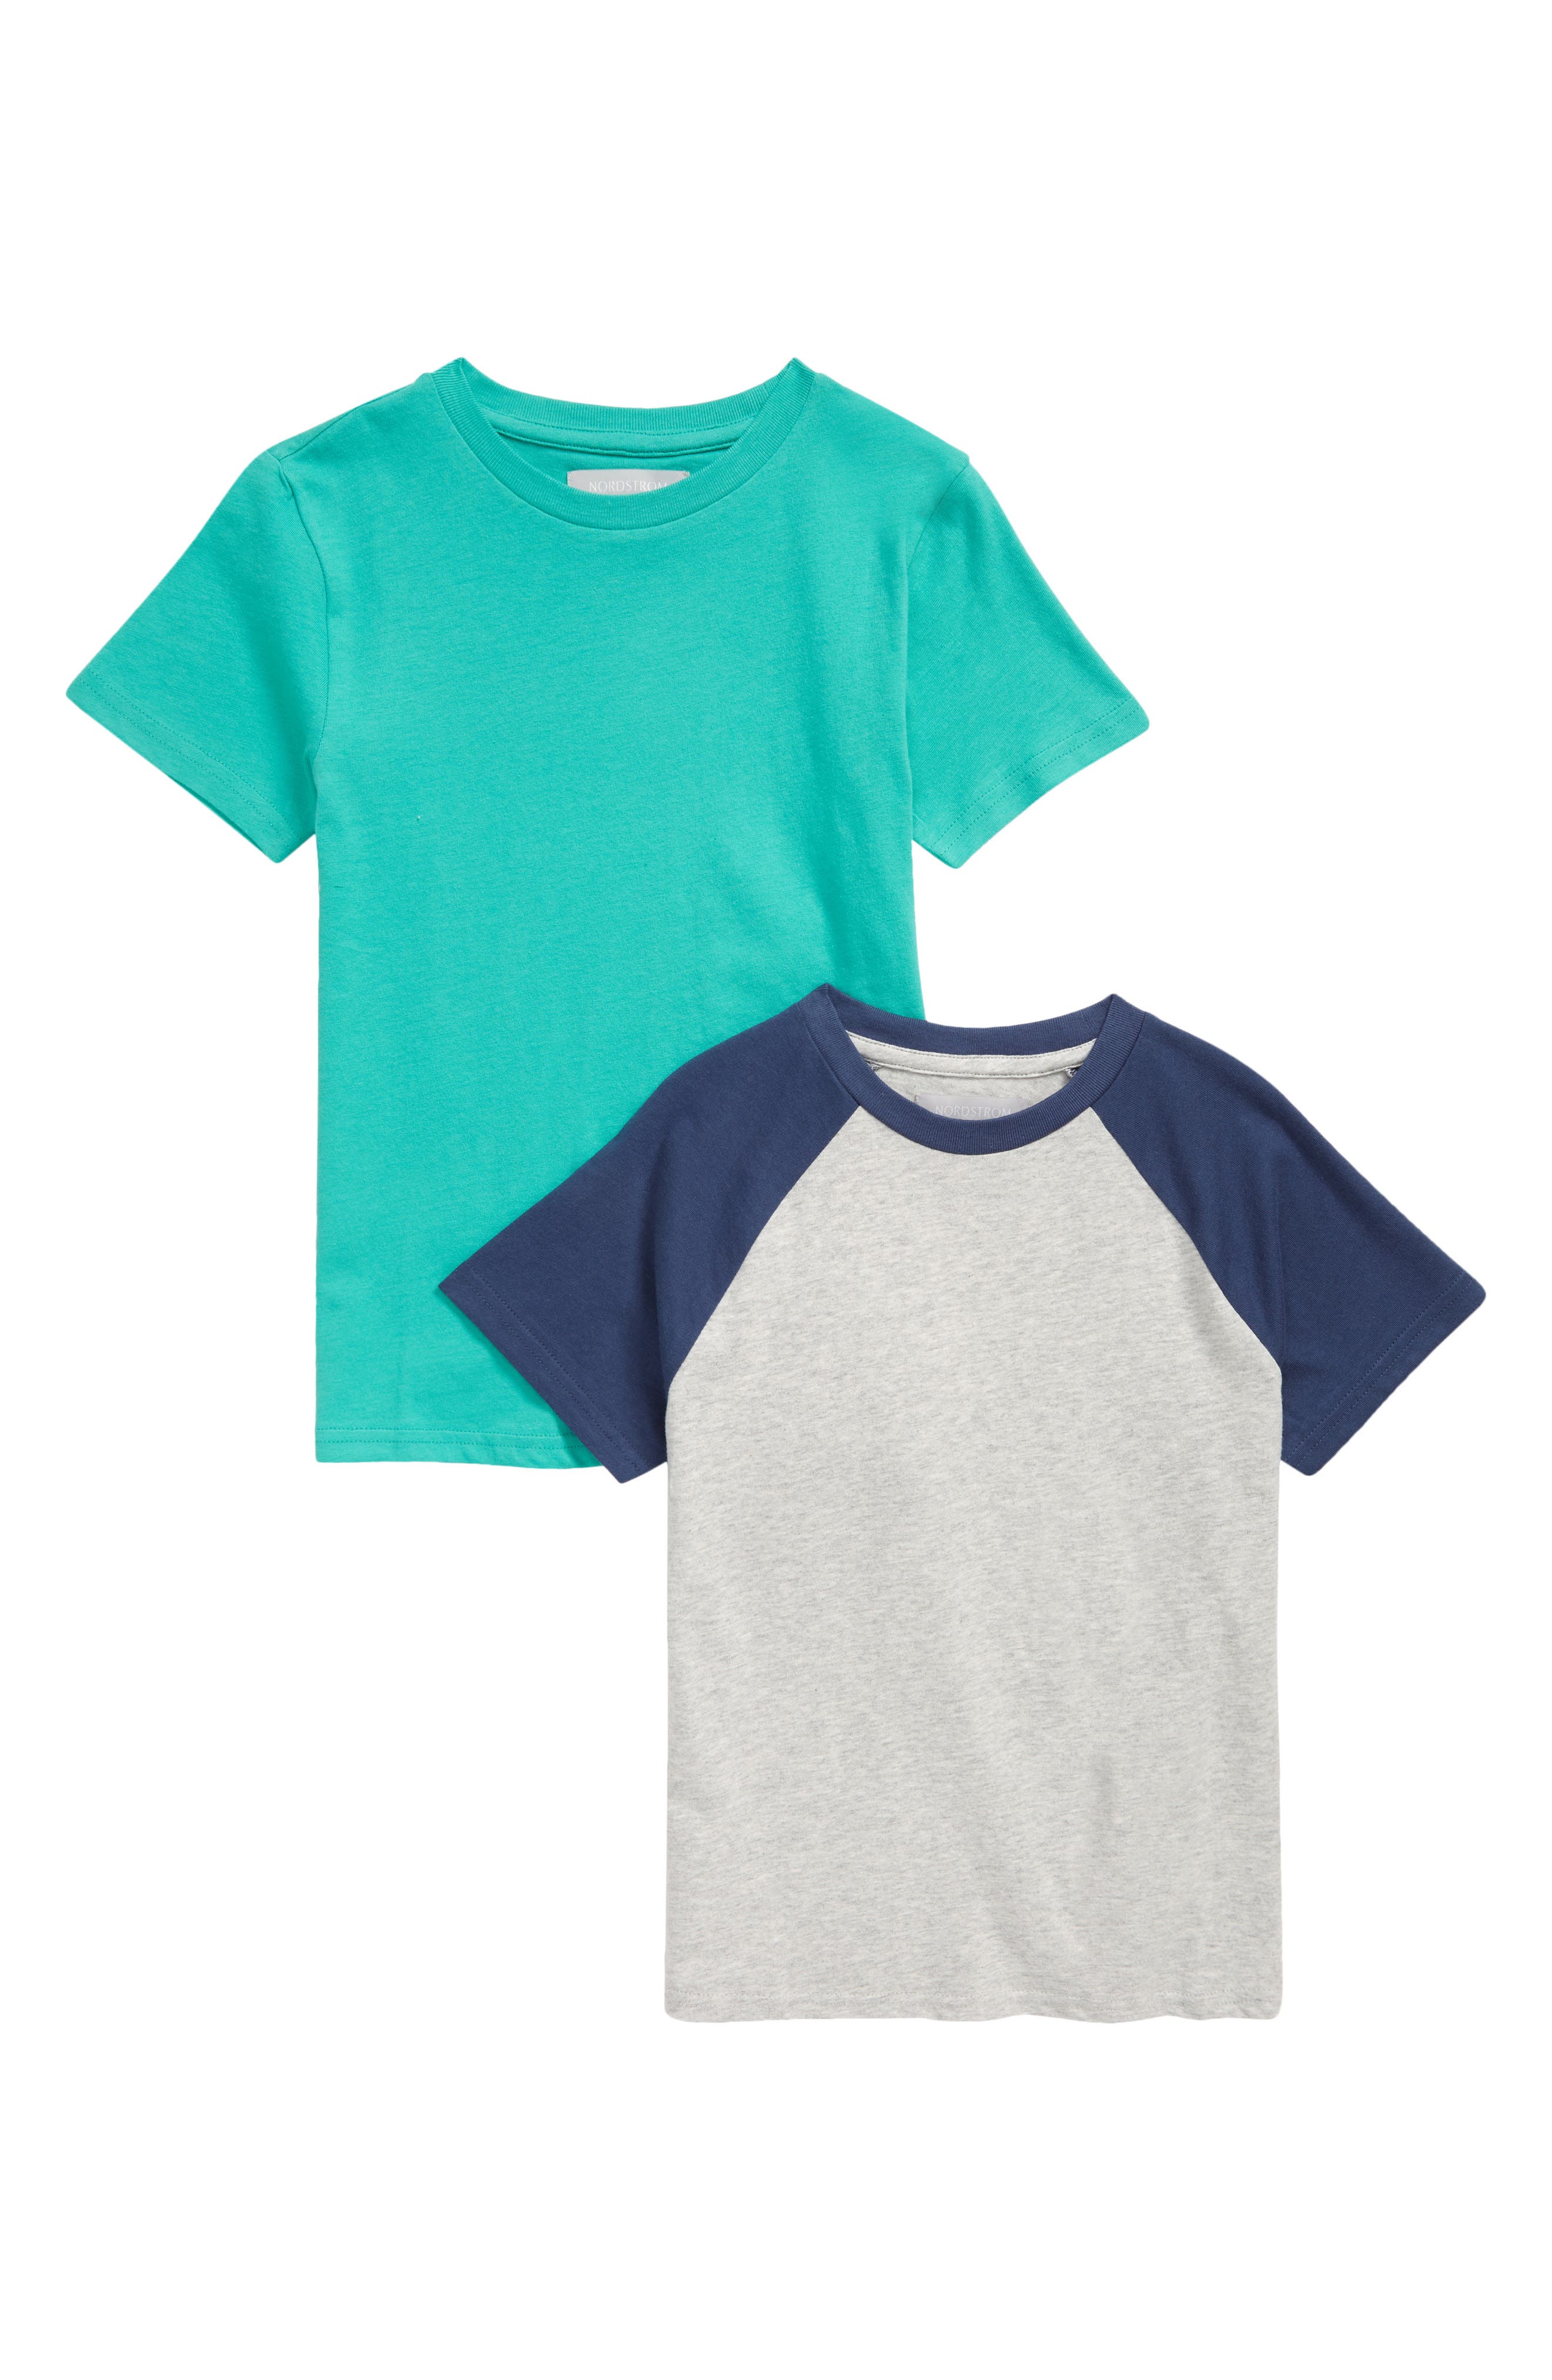 Childs Boys Girls Kids Organic Cotton GREY BLUE BLACK GREEN T-Shirt Tee Shirt 